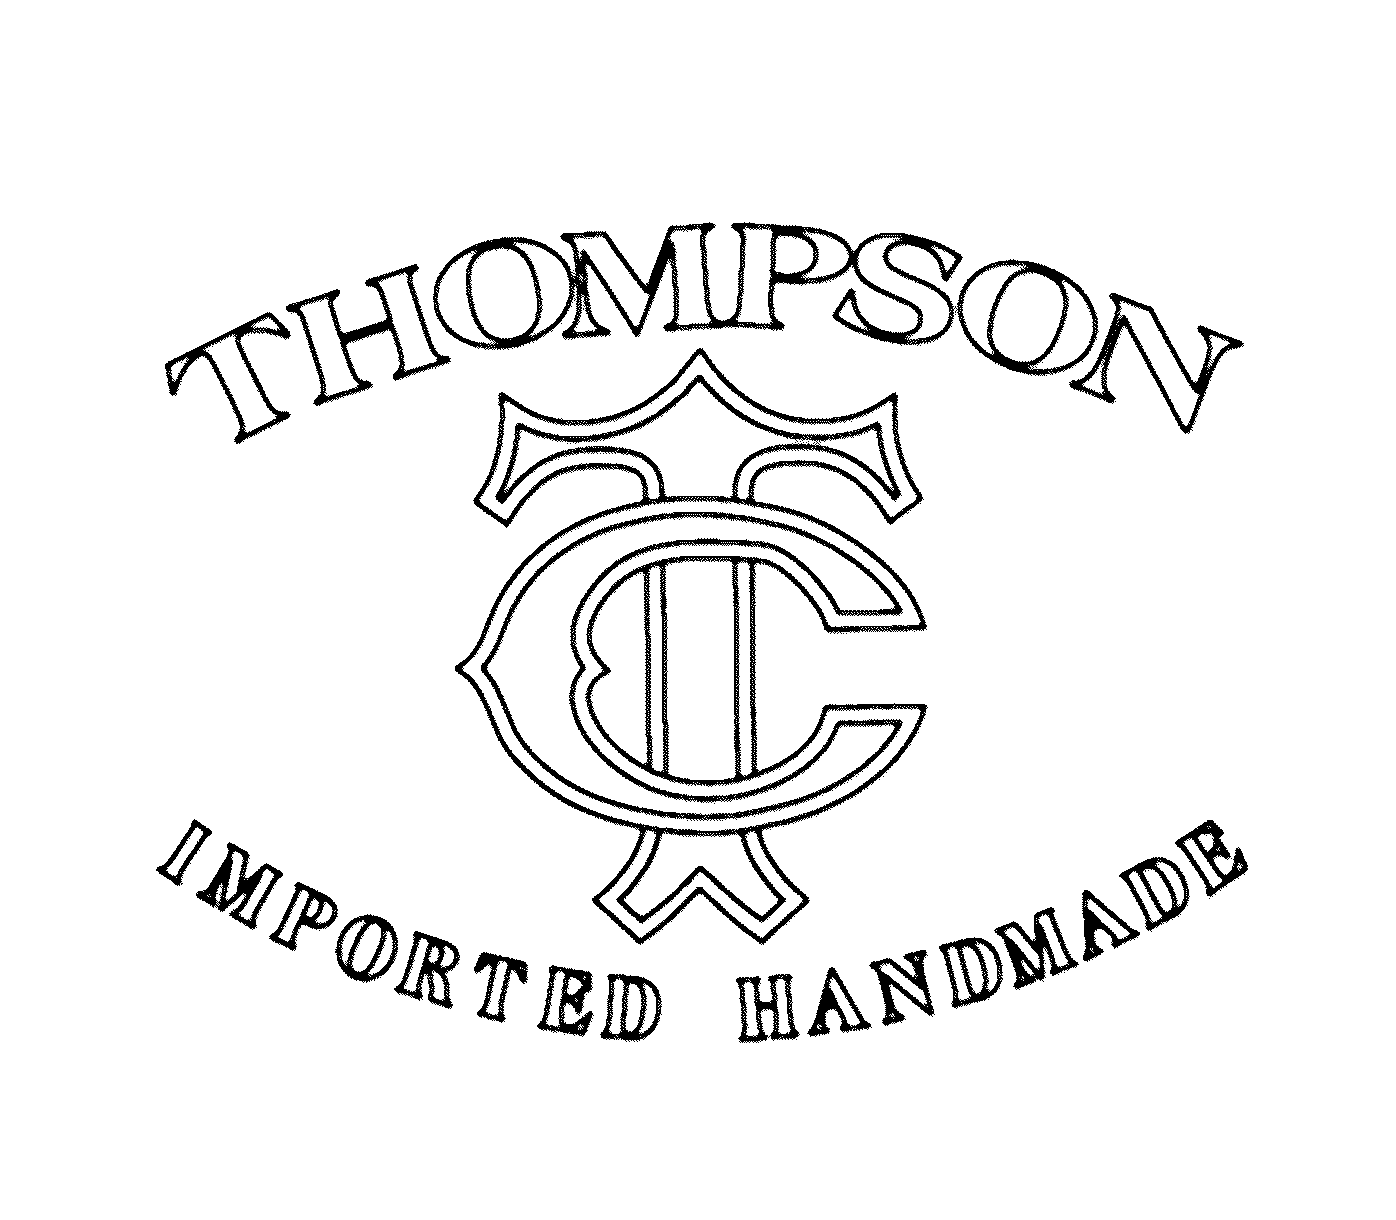  THOMPSON TC IMPORTED HANDMADE